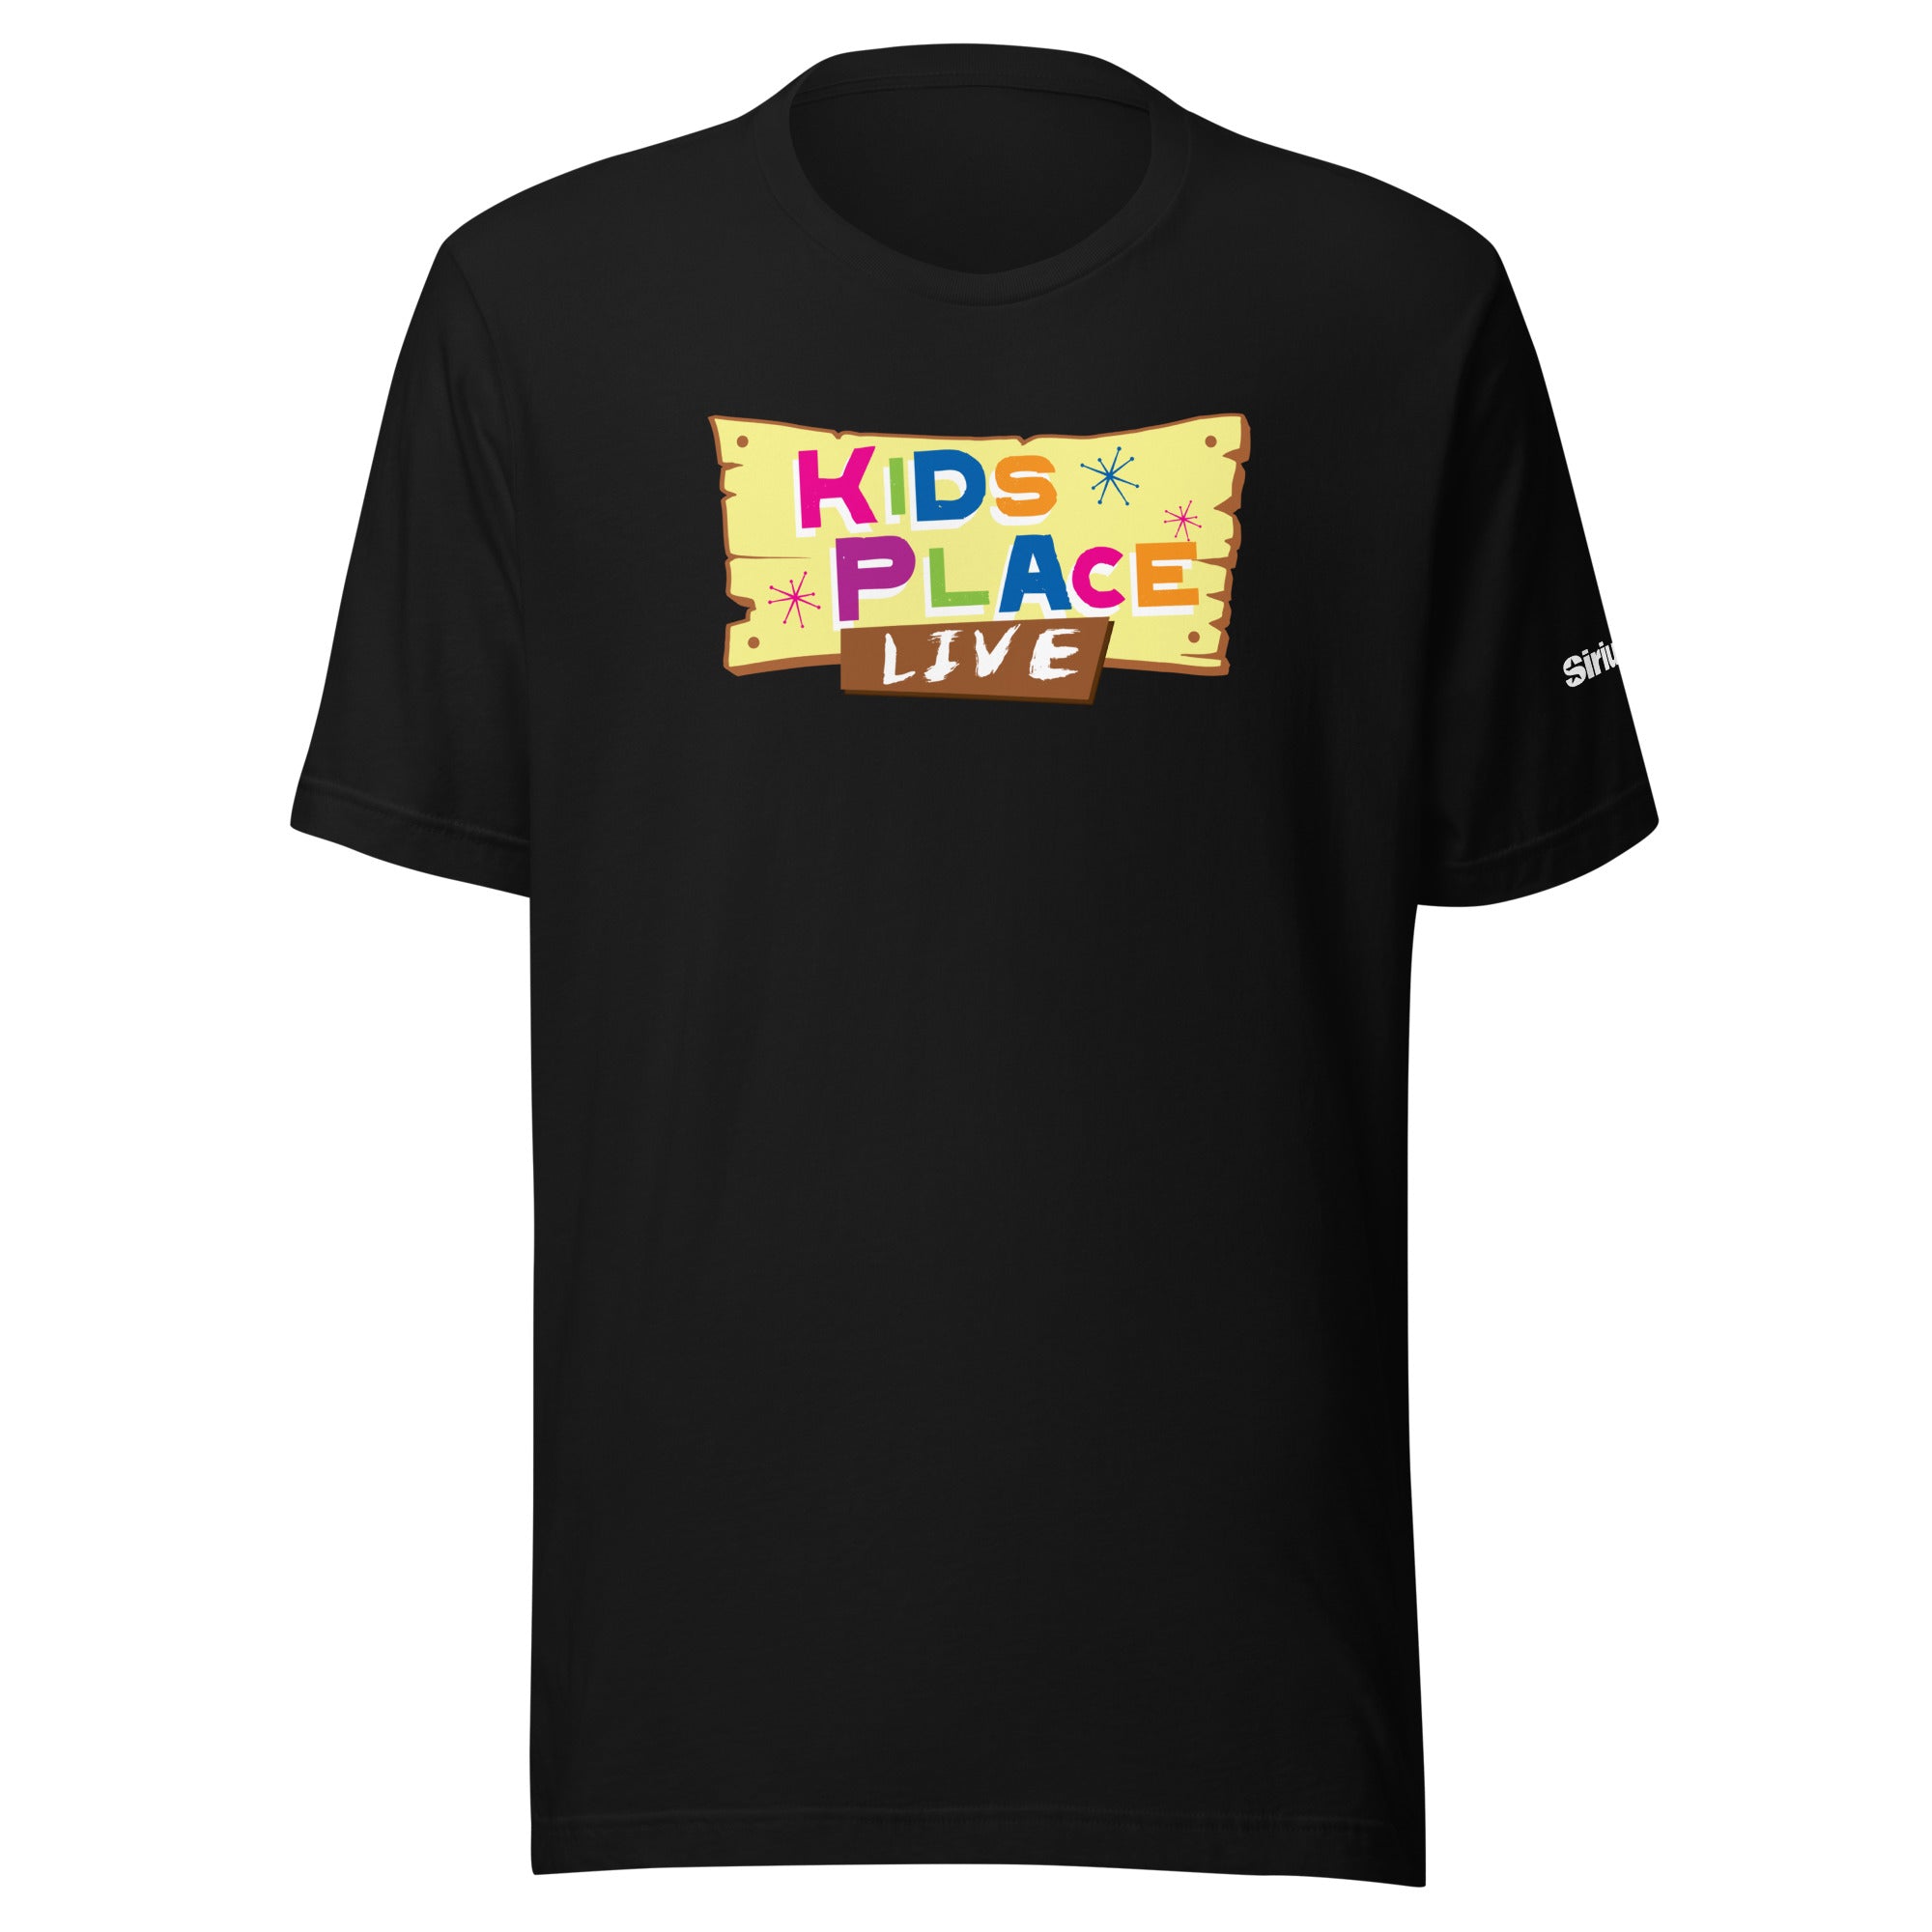 Kids Place Live: T-shirt (Black)